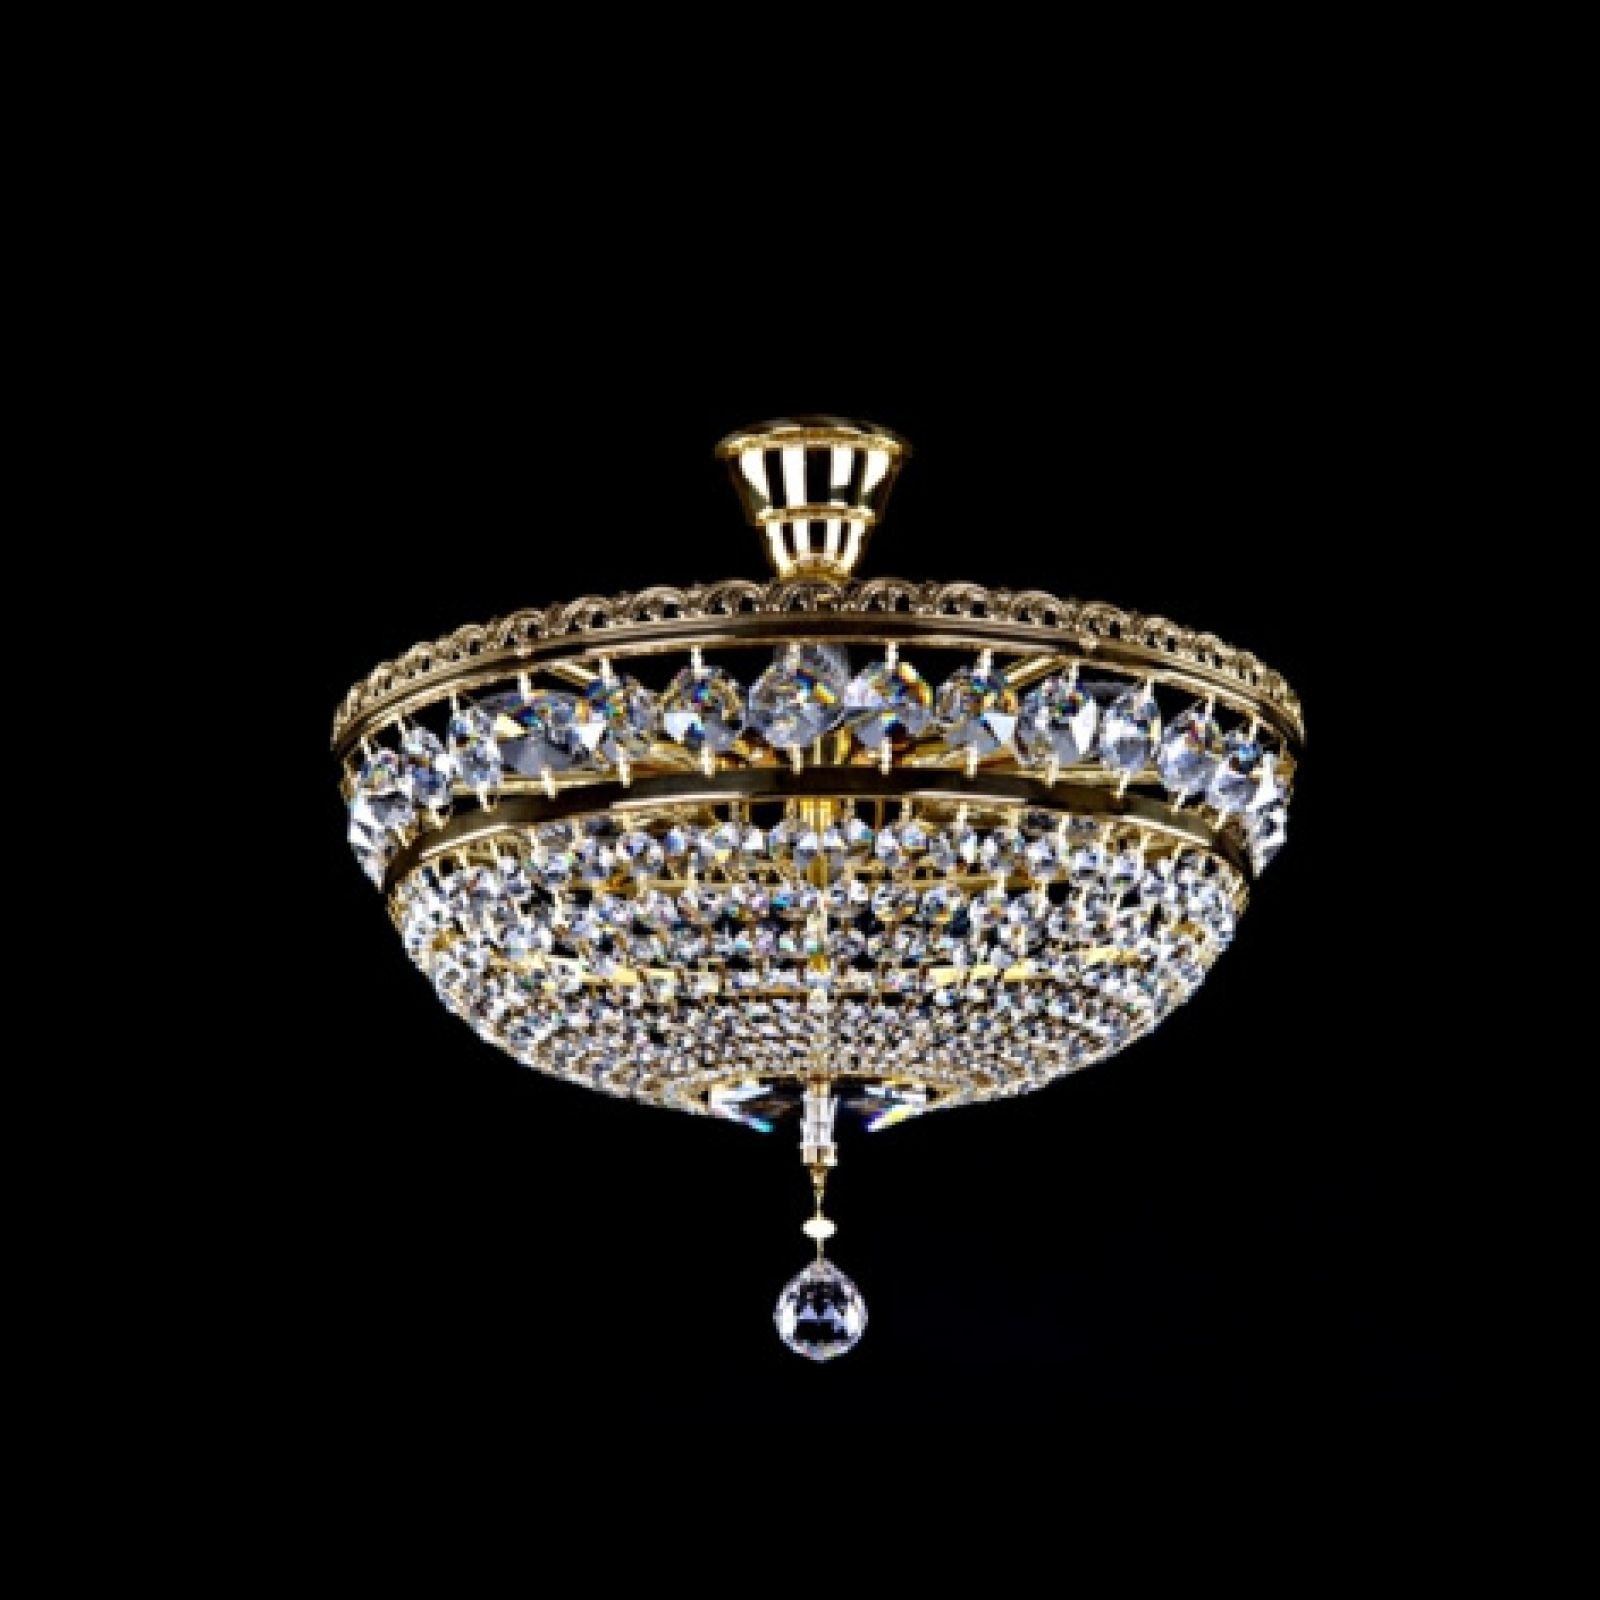 Marla basket chandelier with centre drop